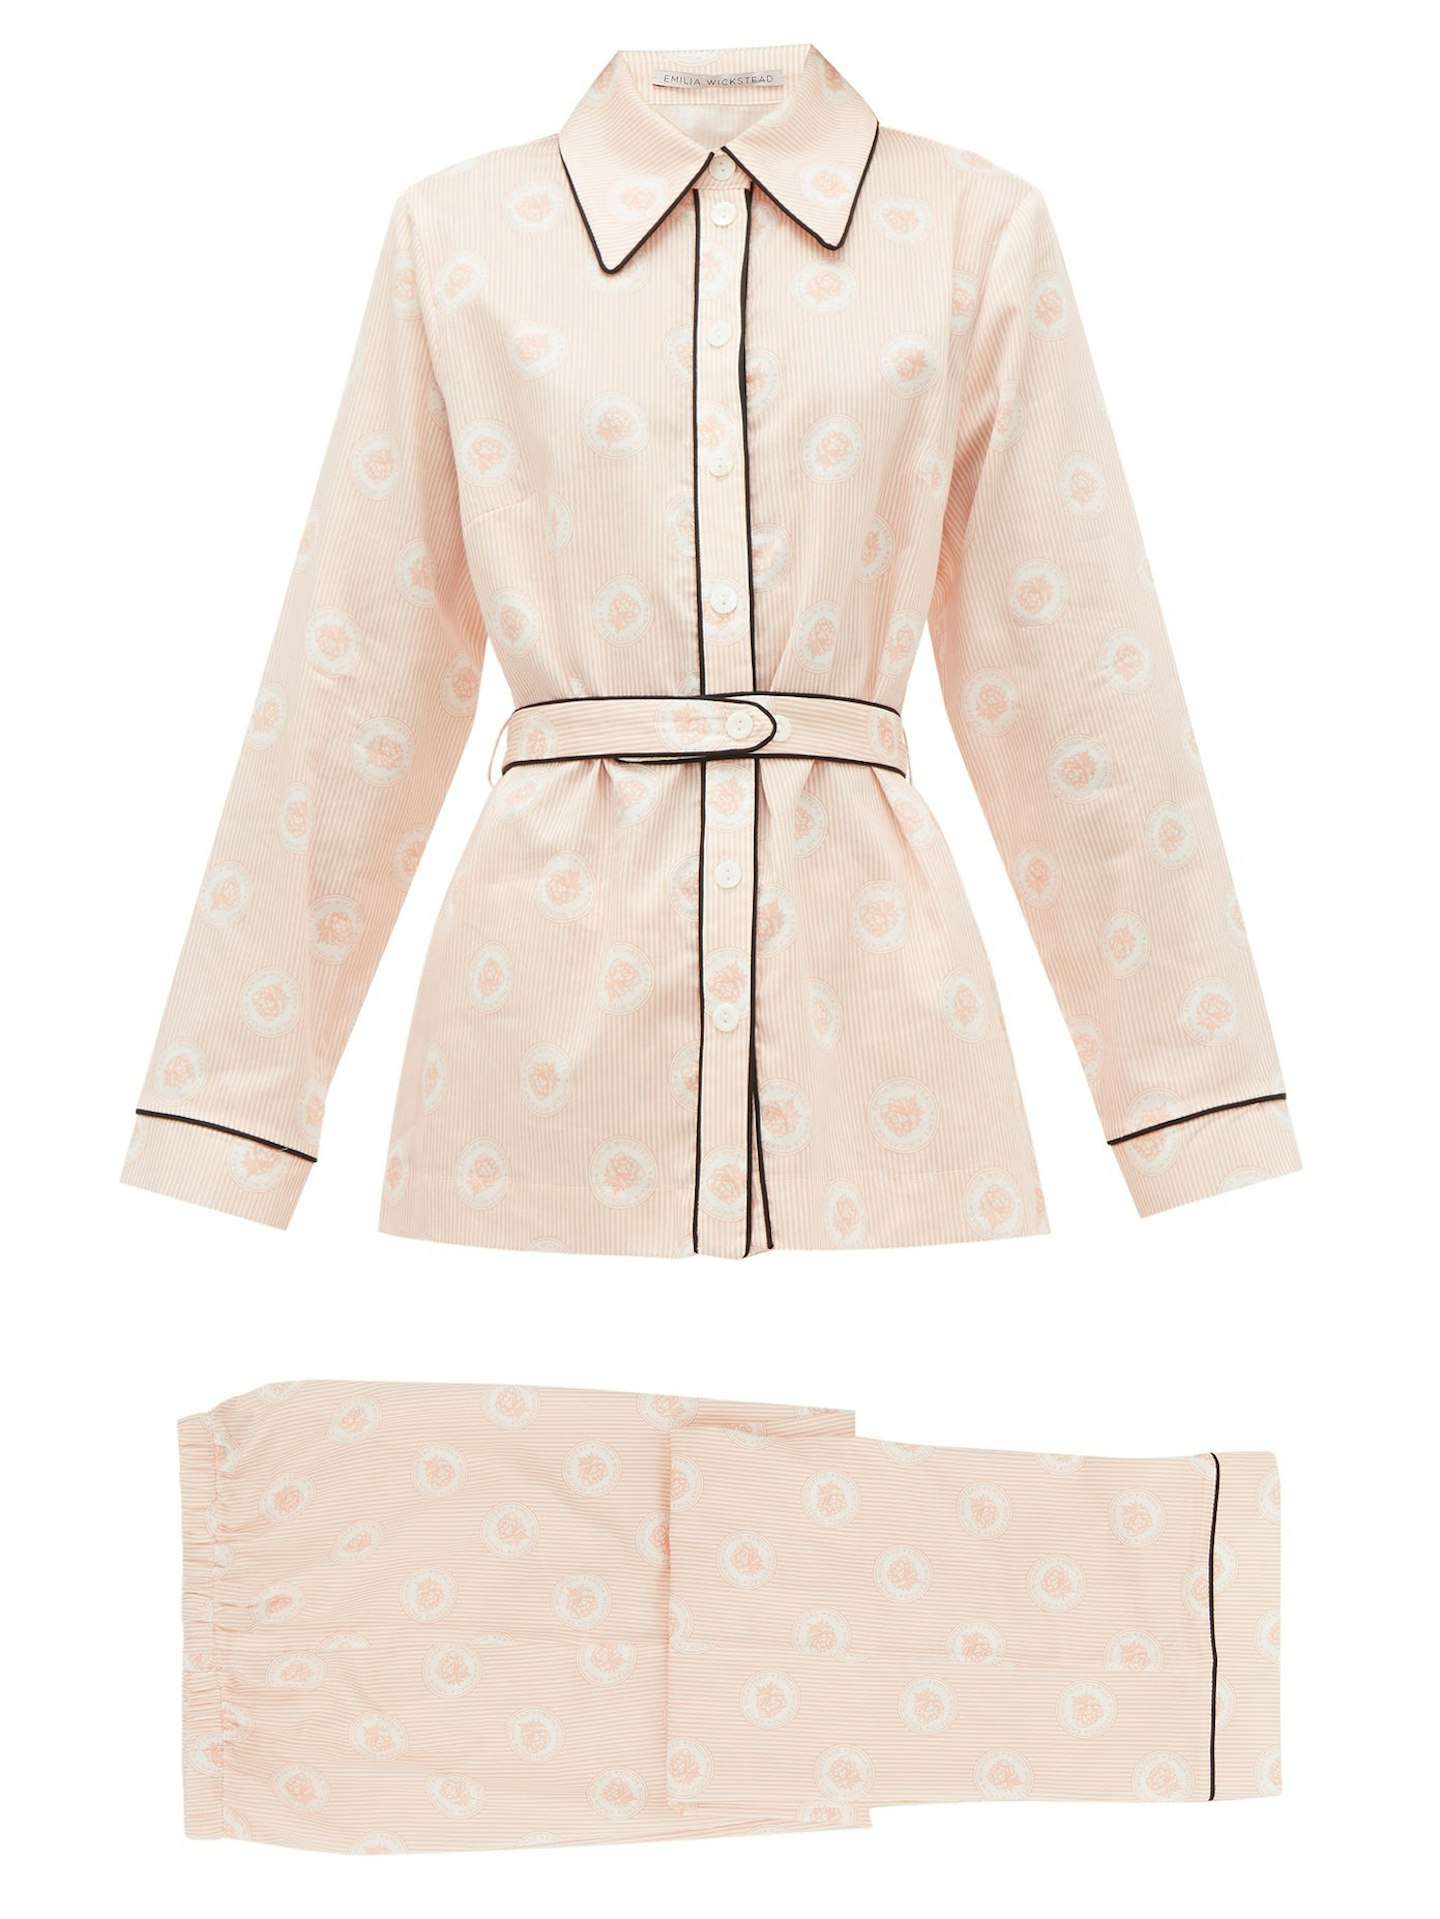 Emilia Wickstead,  Bianca striped cotton-poplin pyjamas, £590